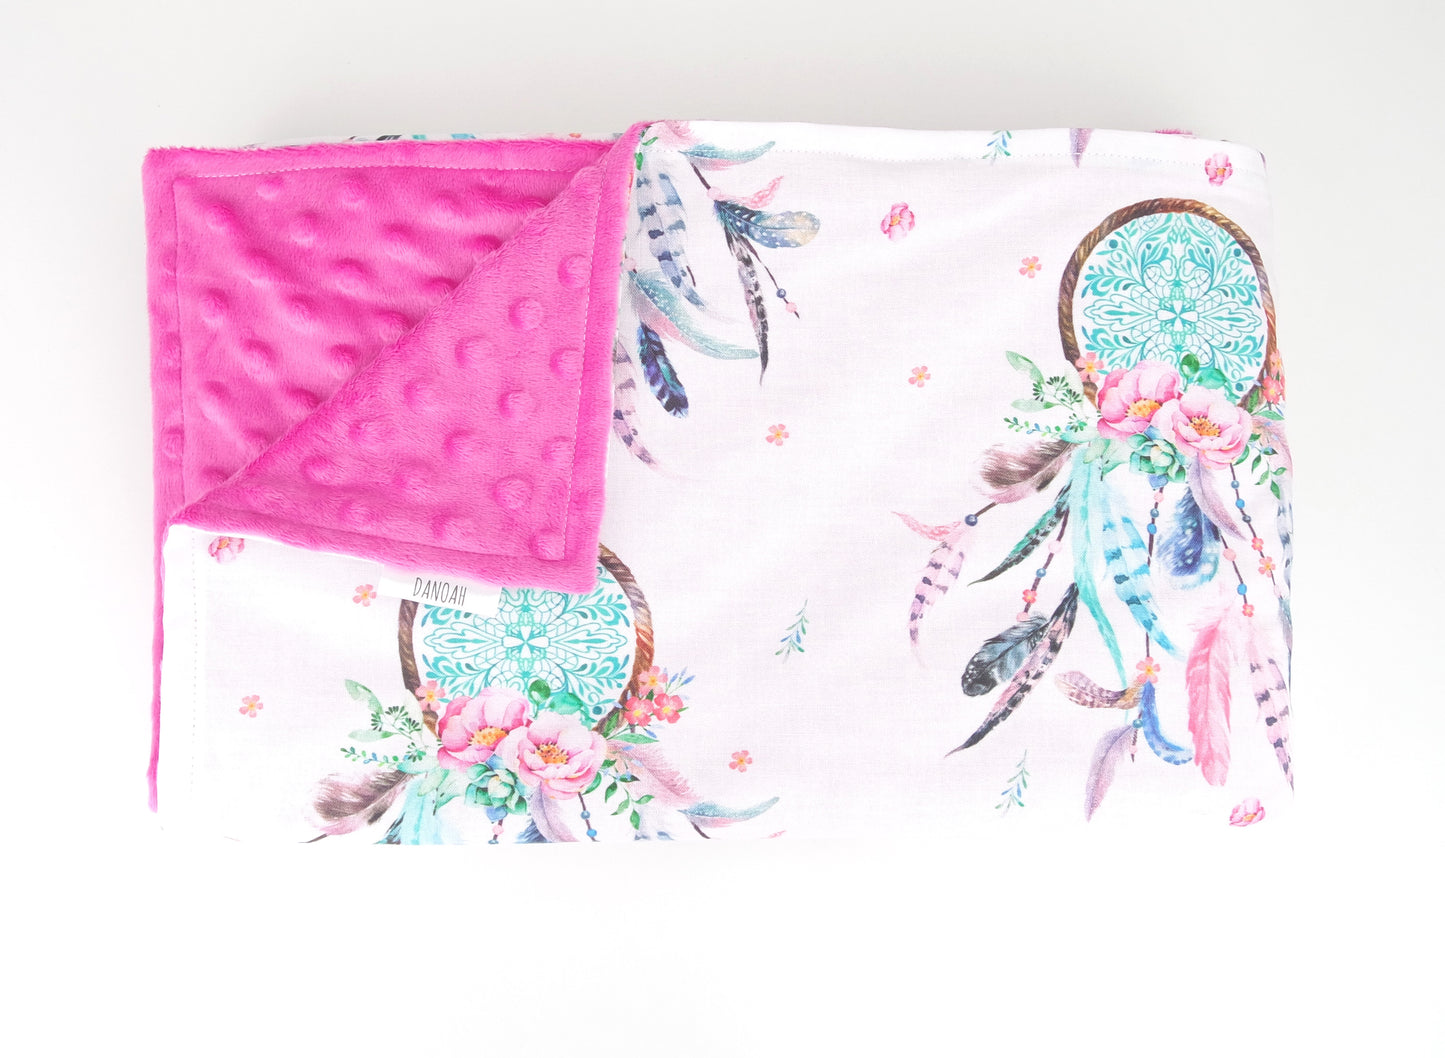 Bright Pink Dreamcatcher Minky Baby Blanket